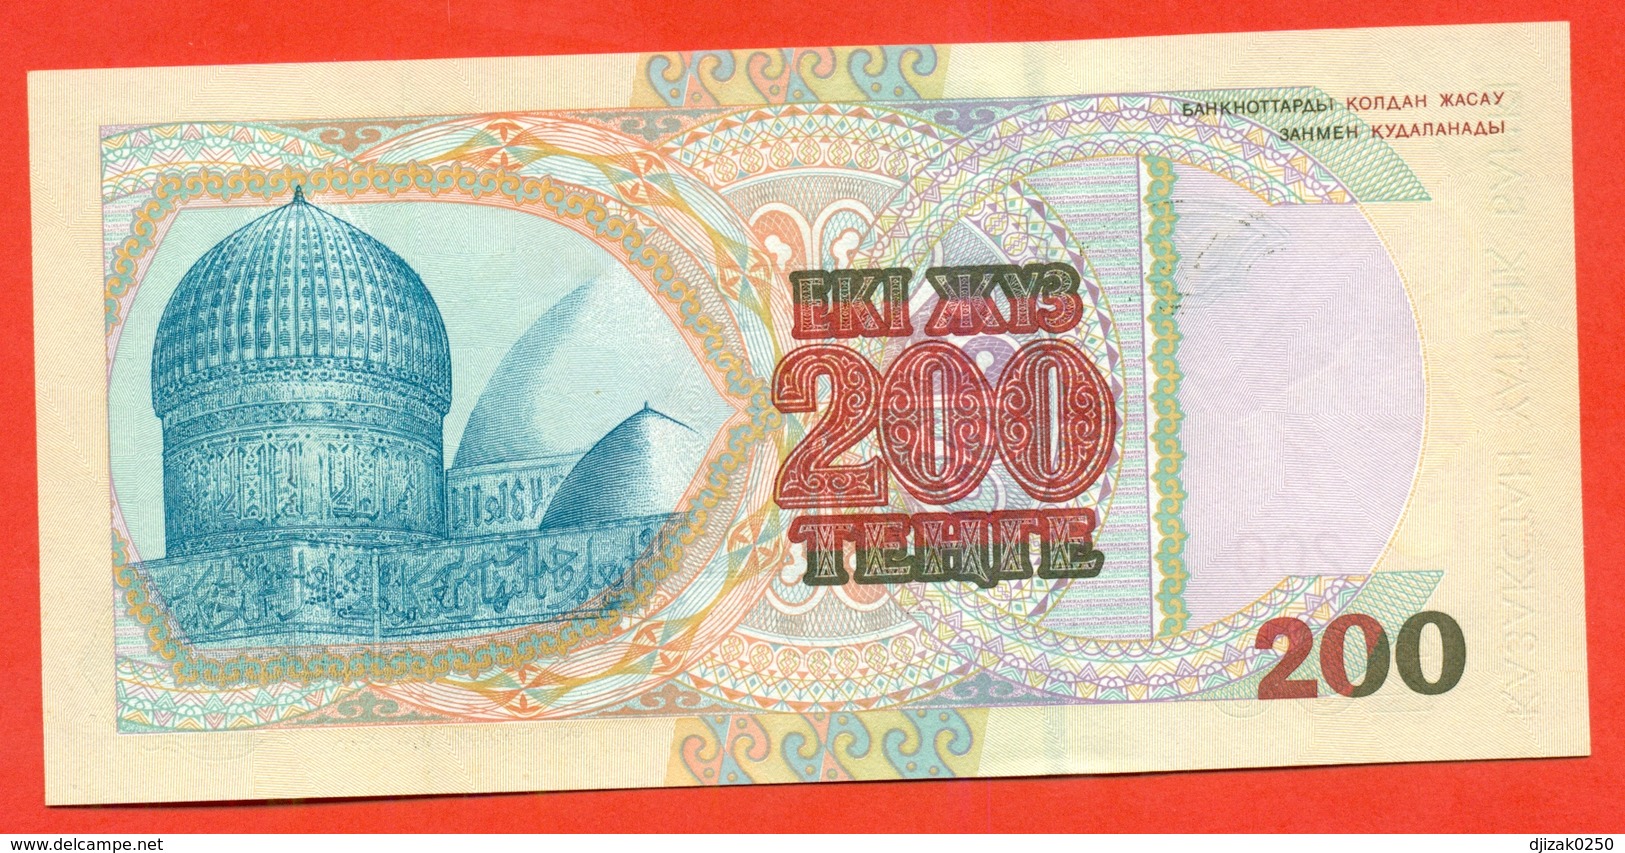 Kazakhstan 1998. 200 Tenge.  "what You See Is Exactly What You Get” UNC. - Kazakhstan